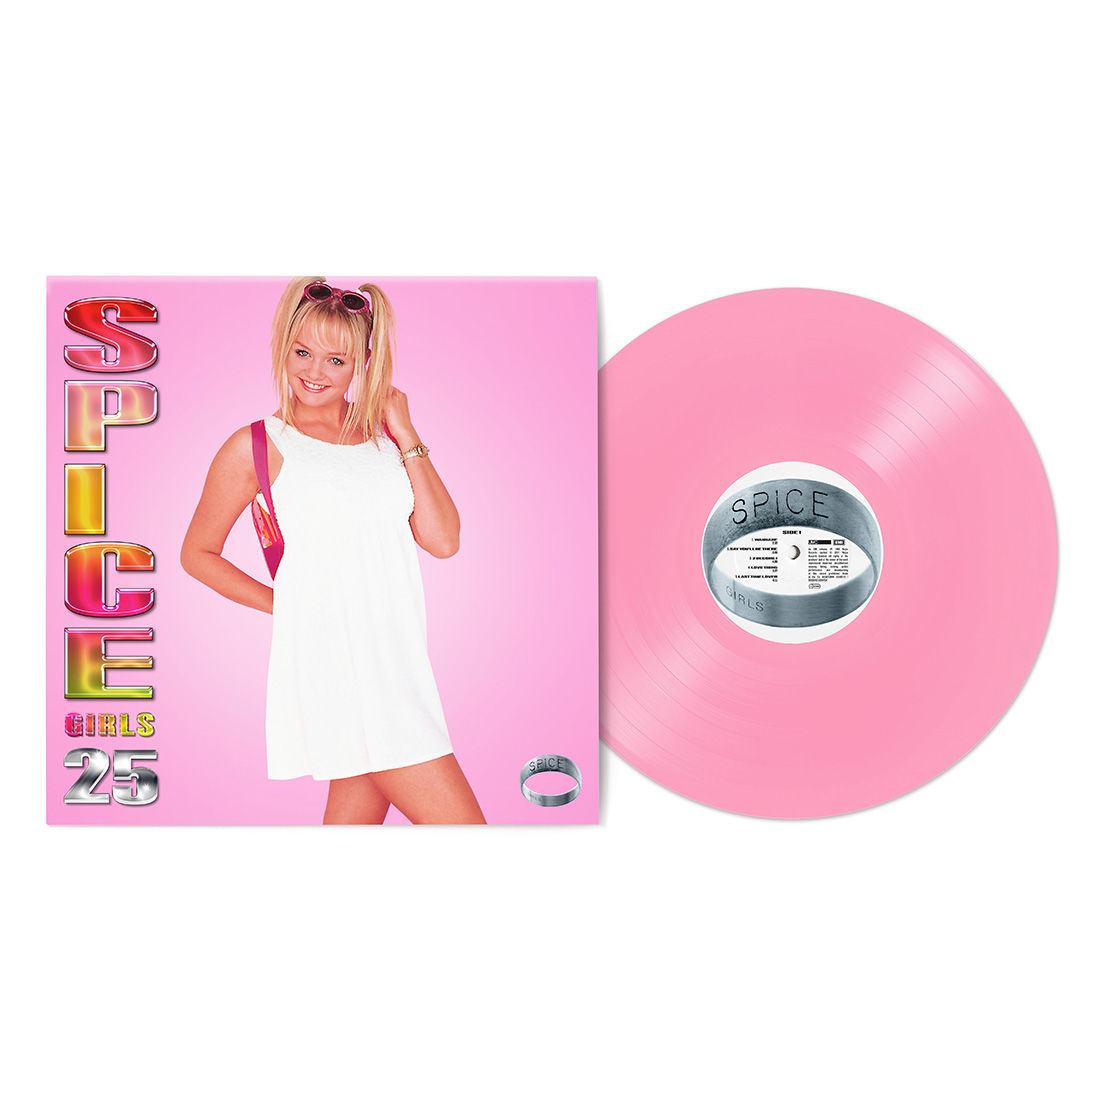 Spice Girls - Spice (25th Anniversary Edition) (Pink Vinyl)